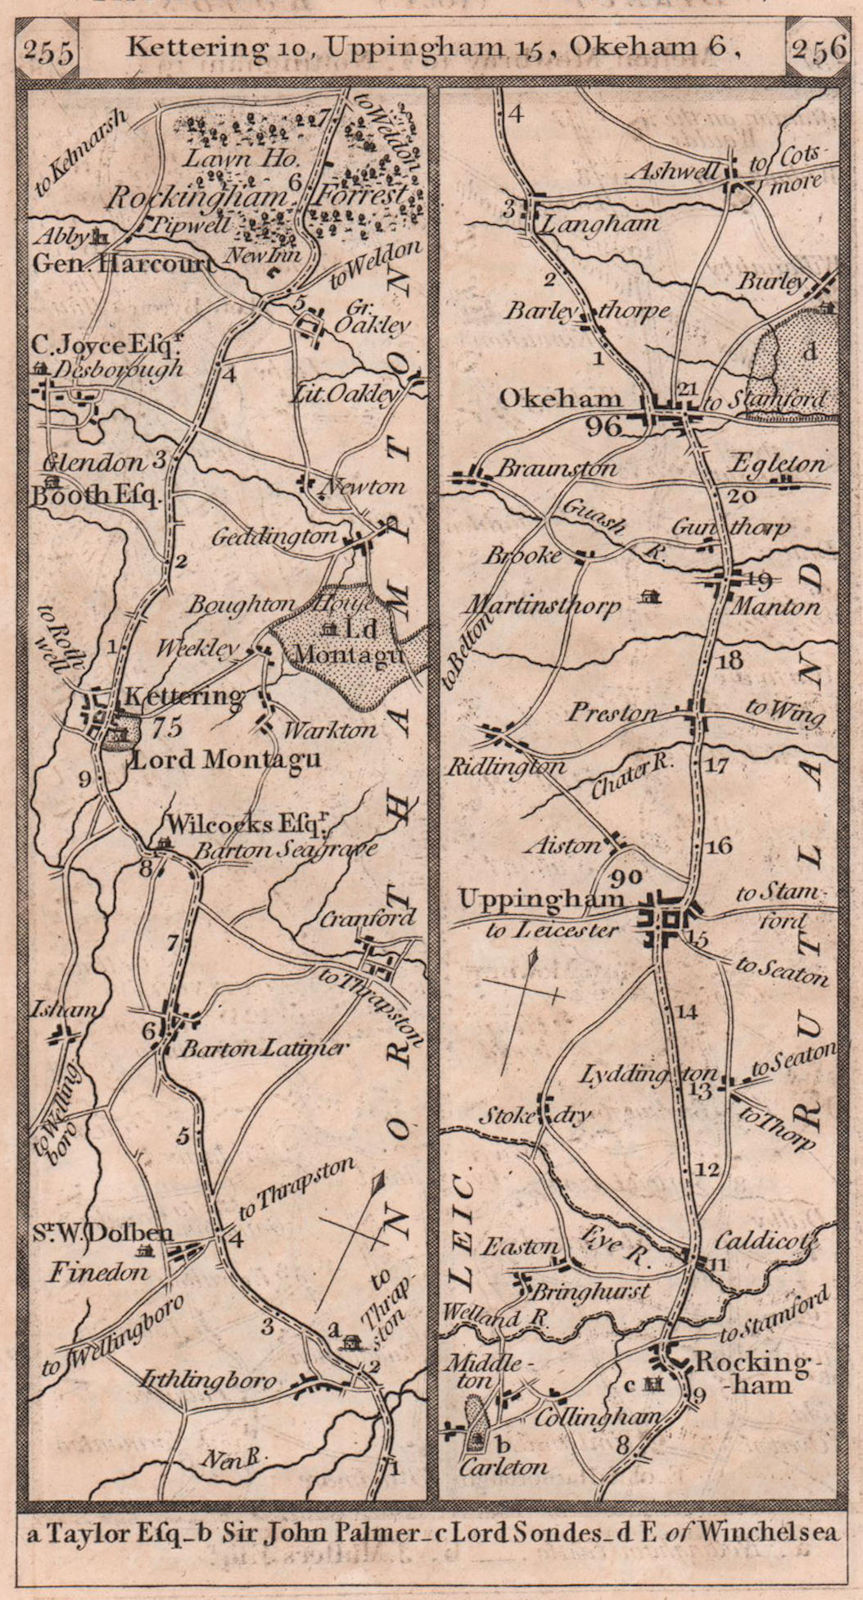 Associate Product Kettering - Rockingham - Uppingham - Oakham road strip map PATERSON 1803